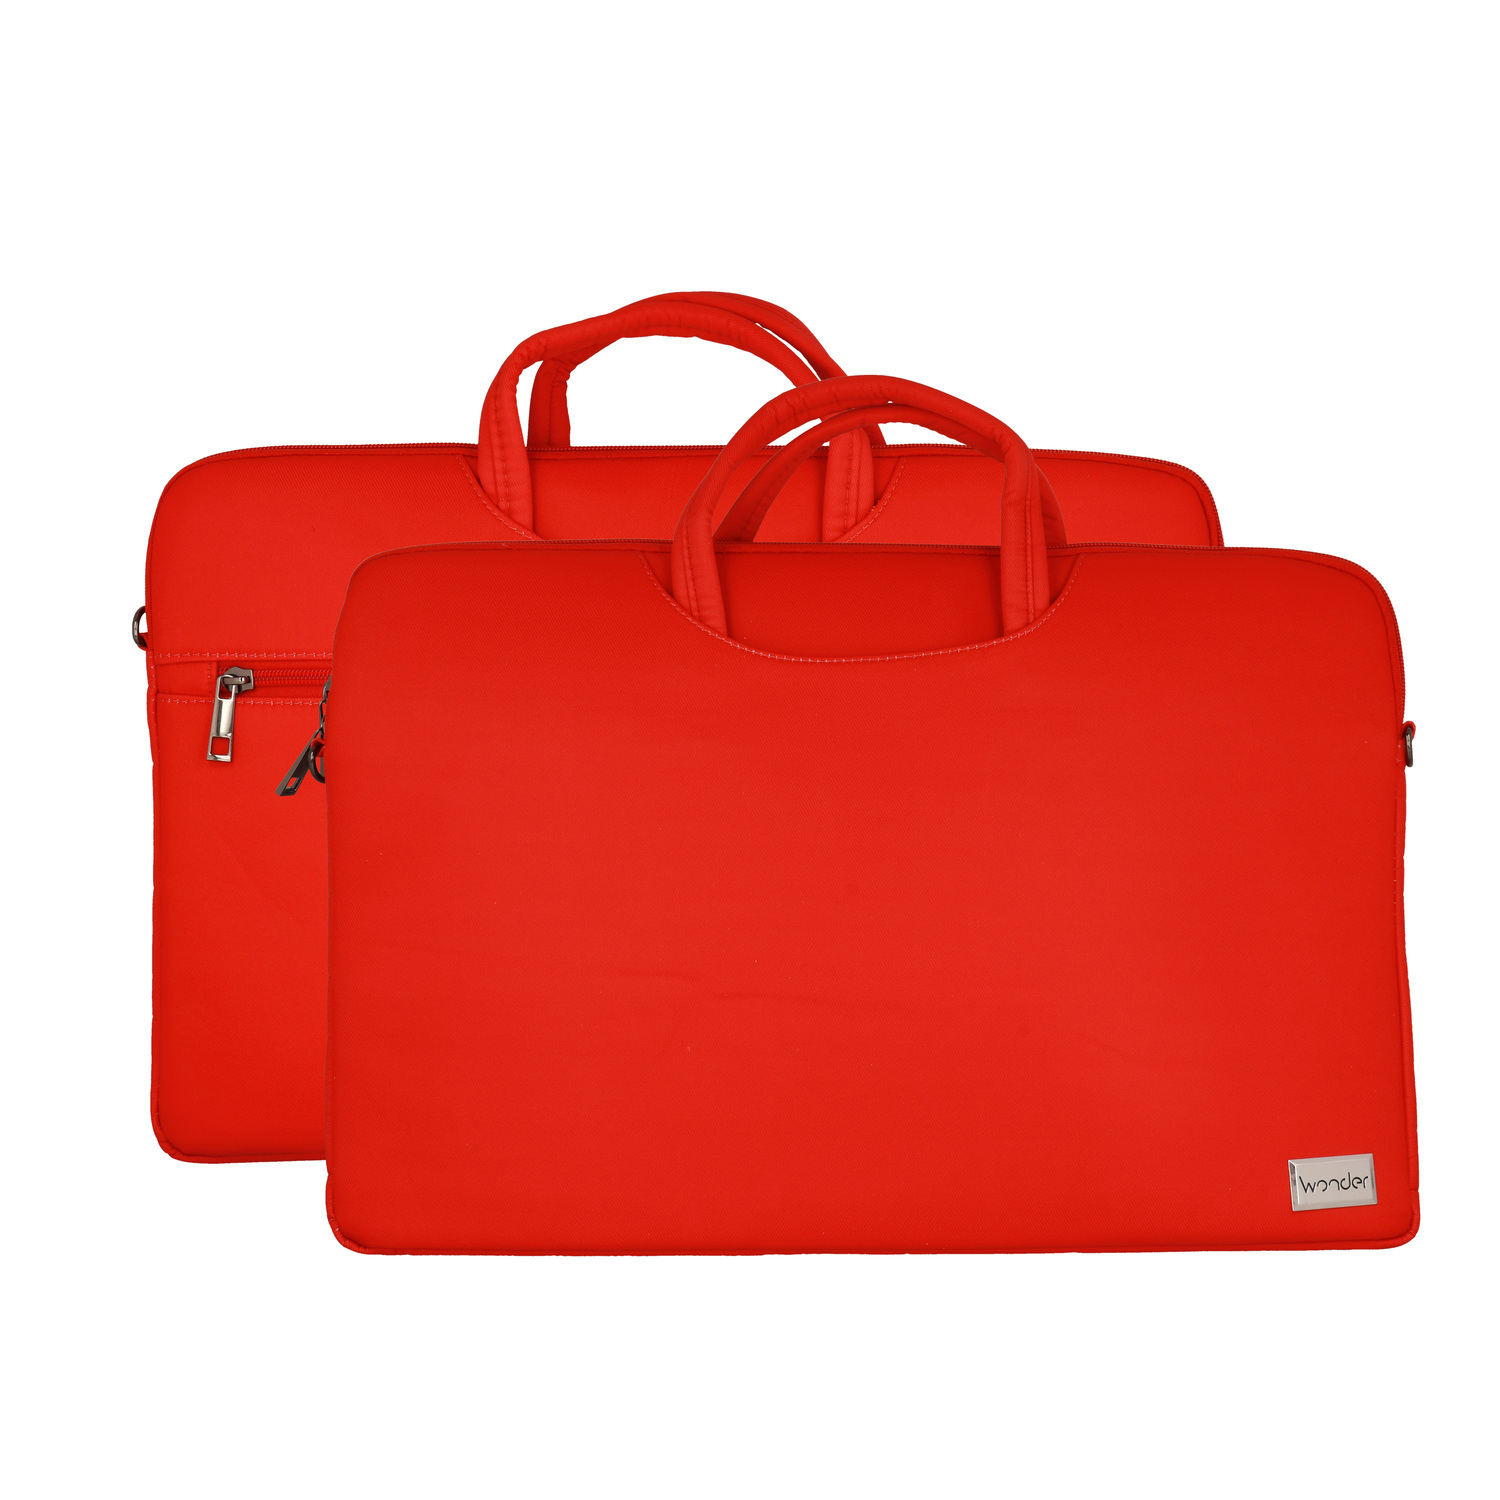 Wonder Briefcase Laptop Sleeve Bag Case Cover 13-14'', Red | Чехол Сумка для Компьютера